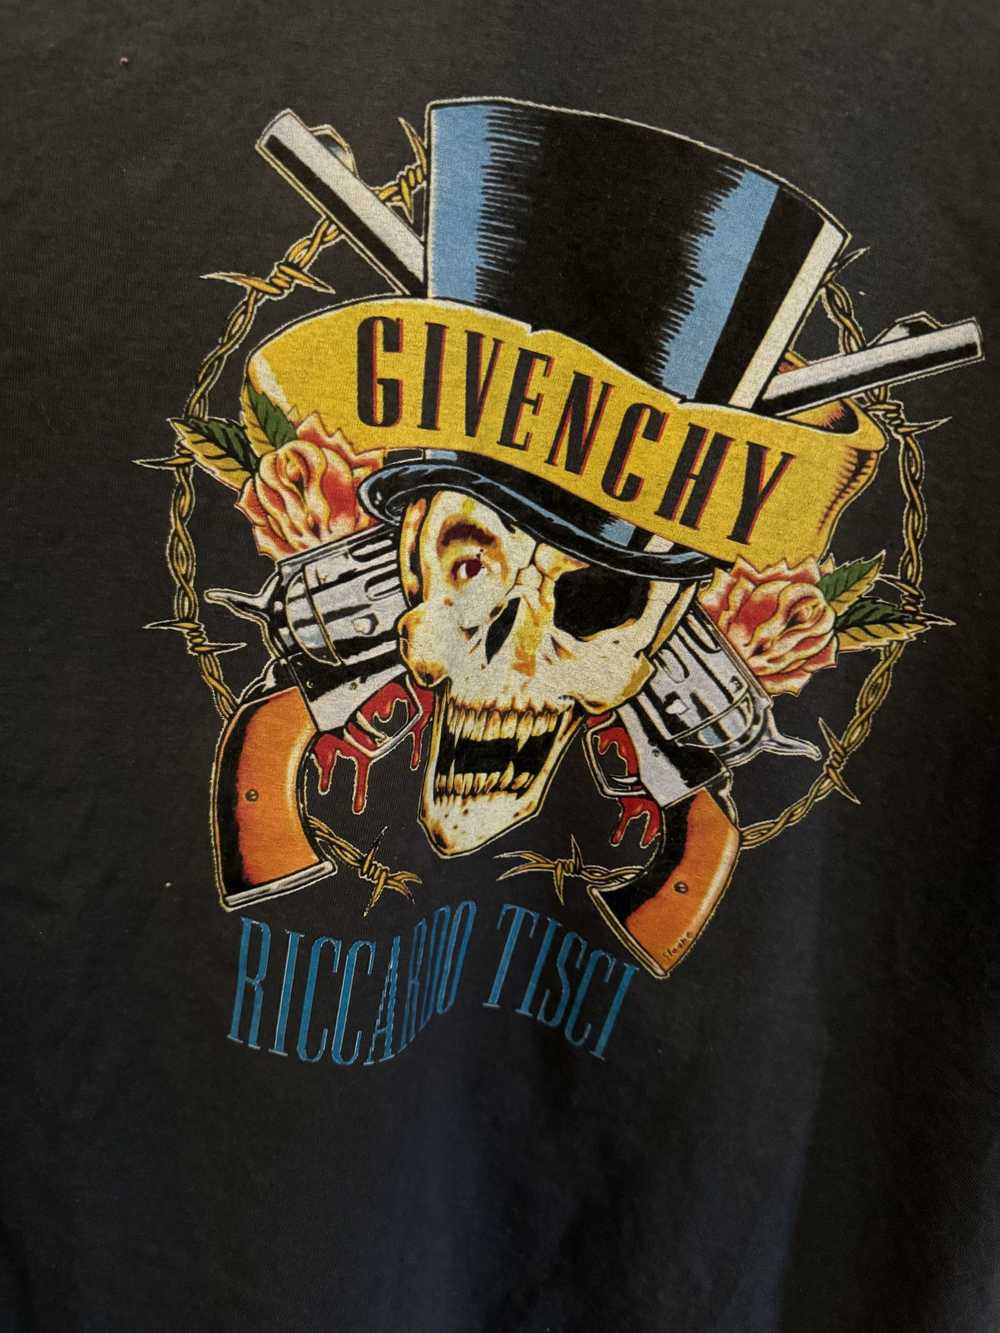 Bleach Givenchy Tour Shirt - image 2